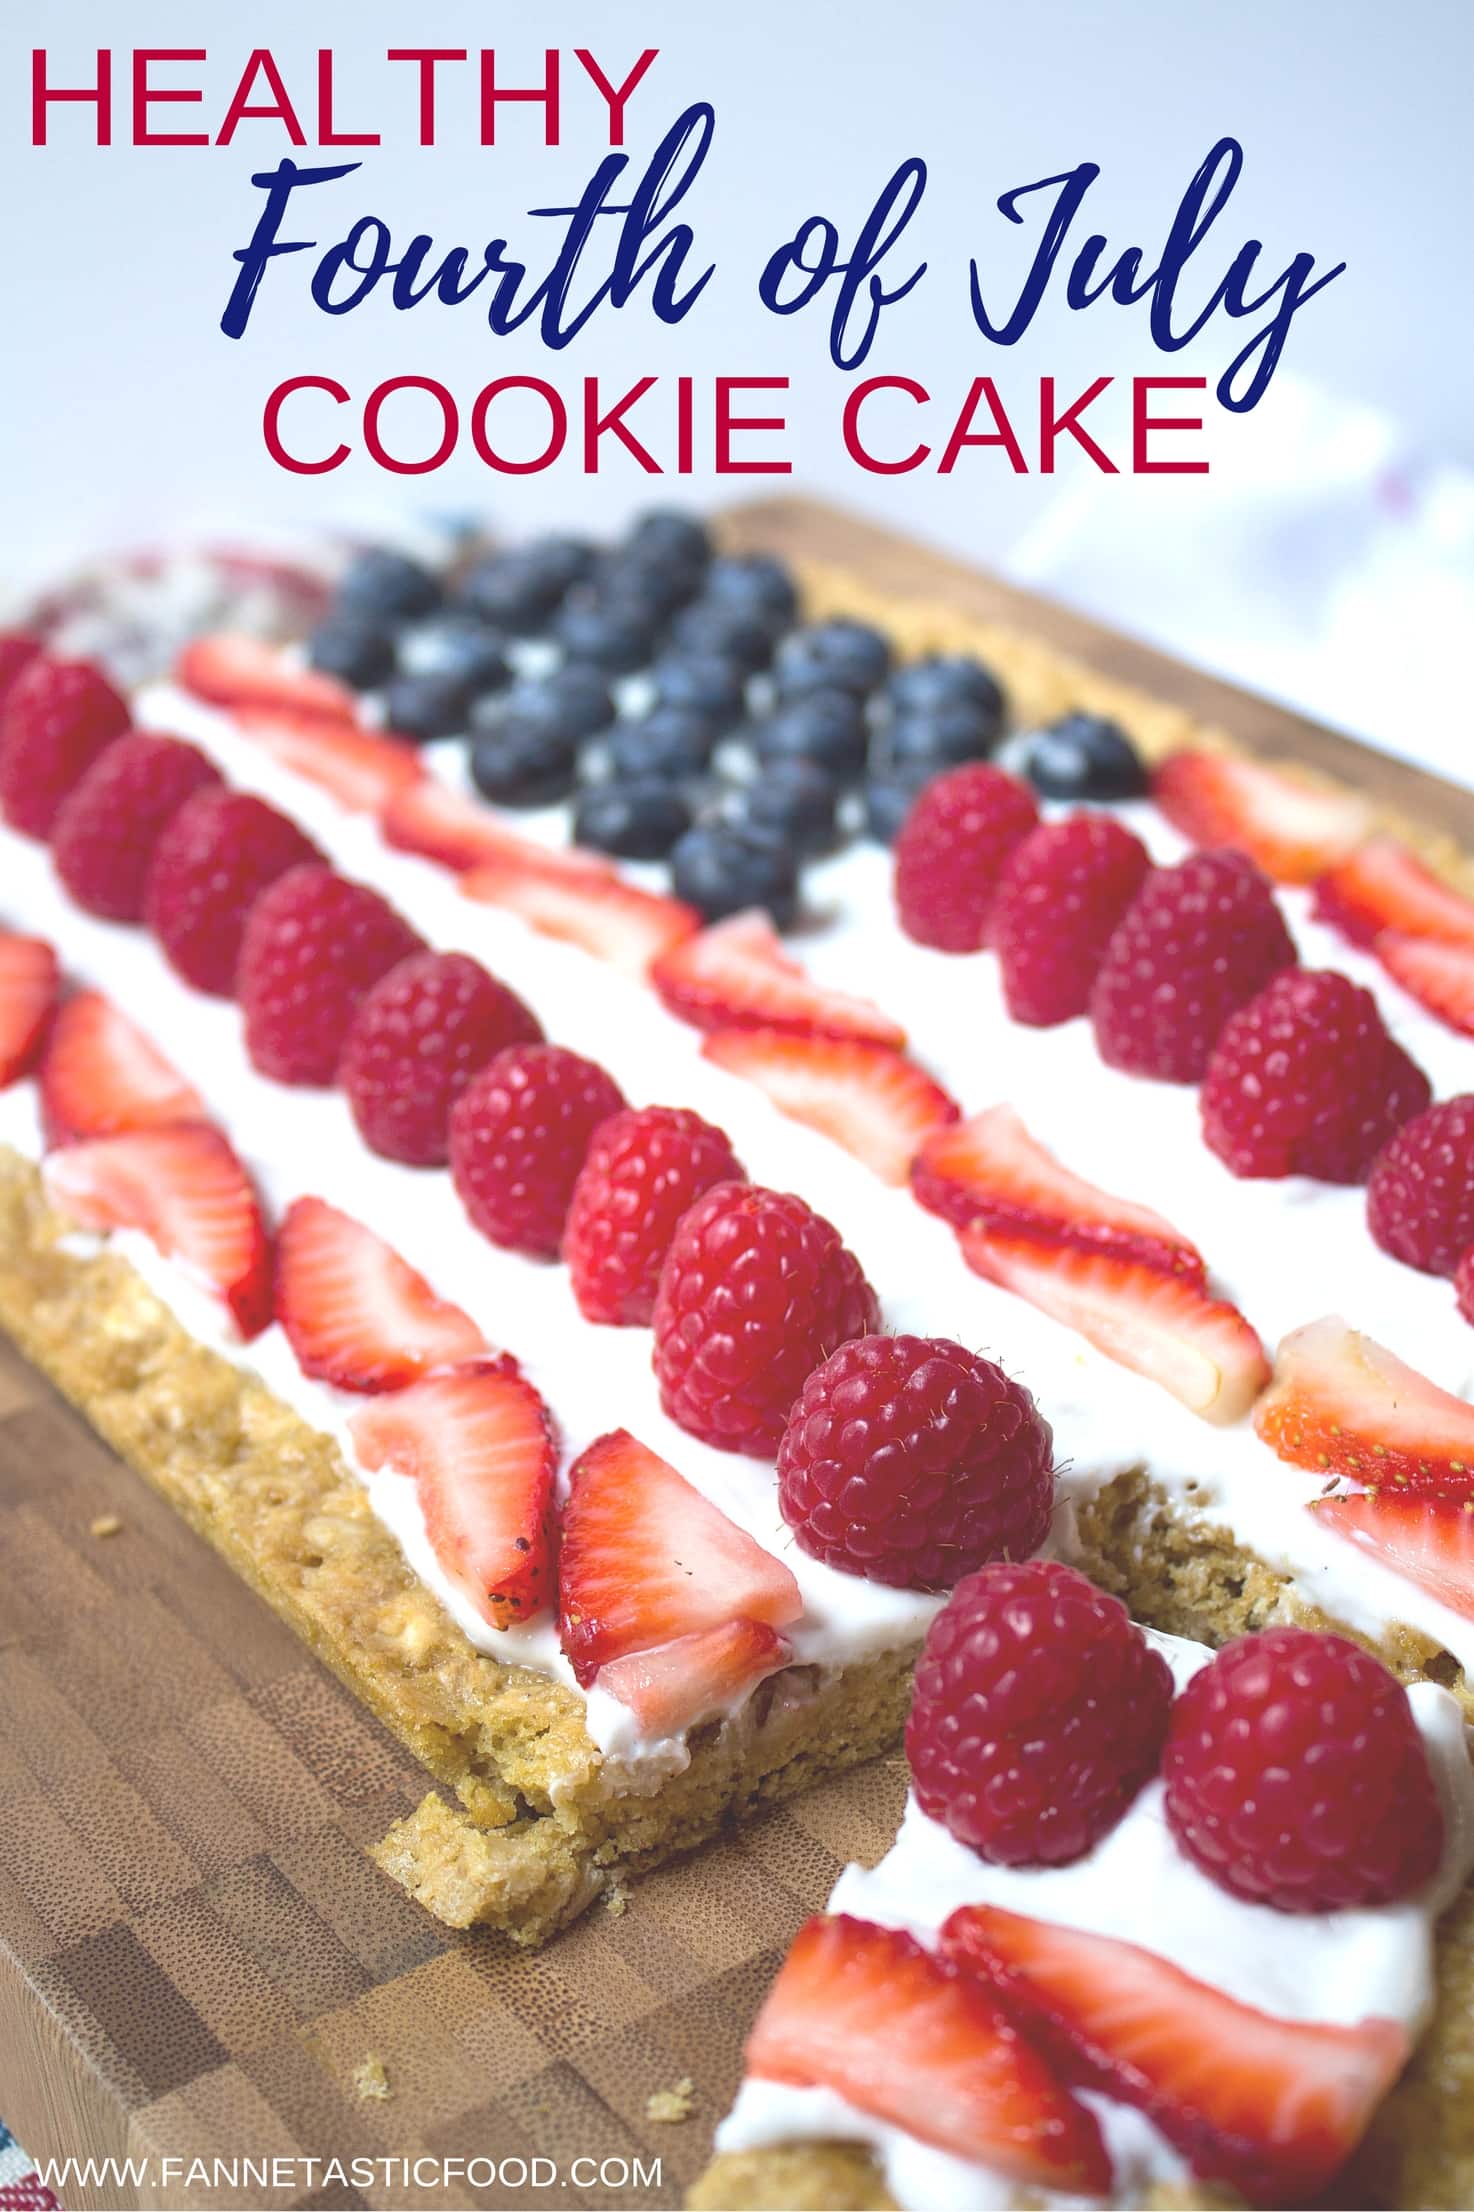 Healthy 4th of July Cookie Cake Recipe - Patriotic Dessert